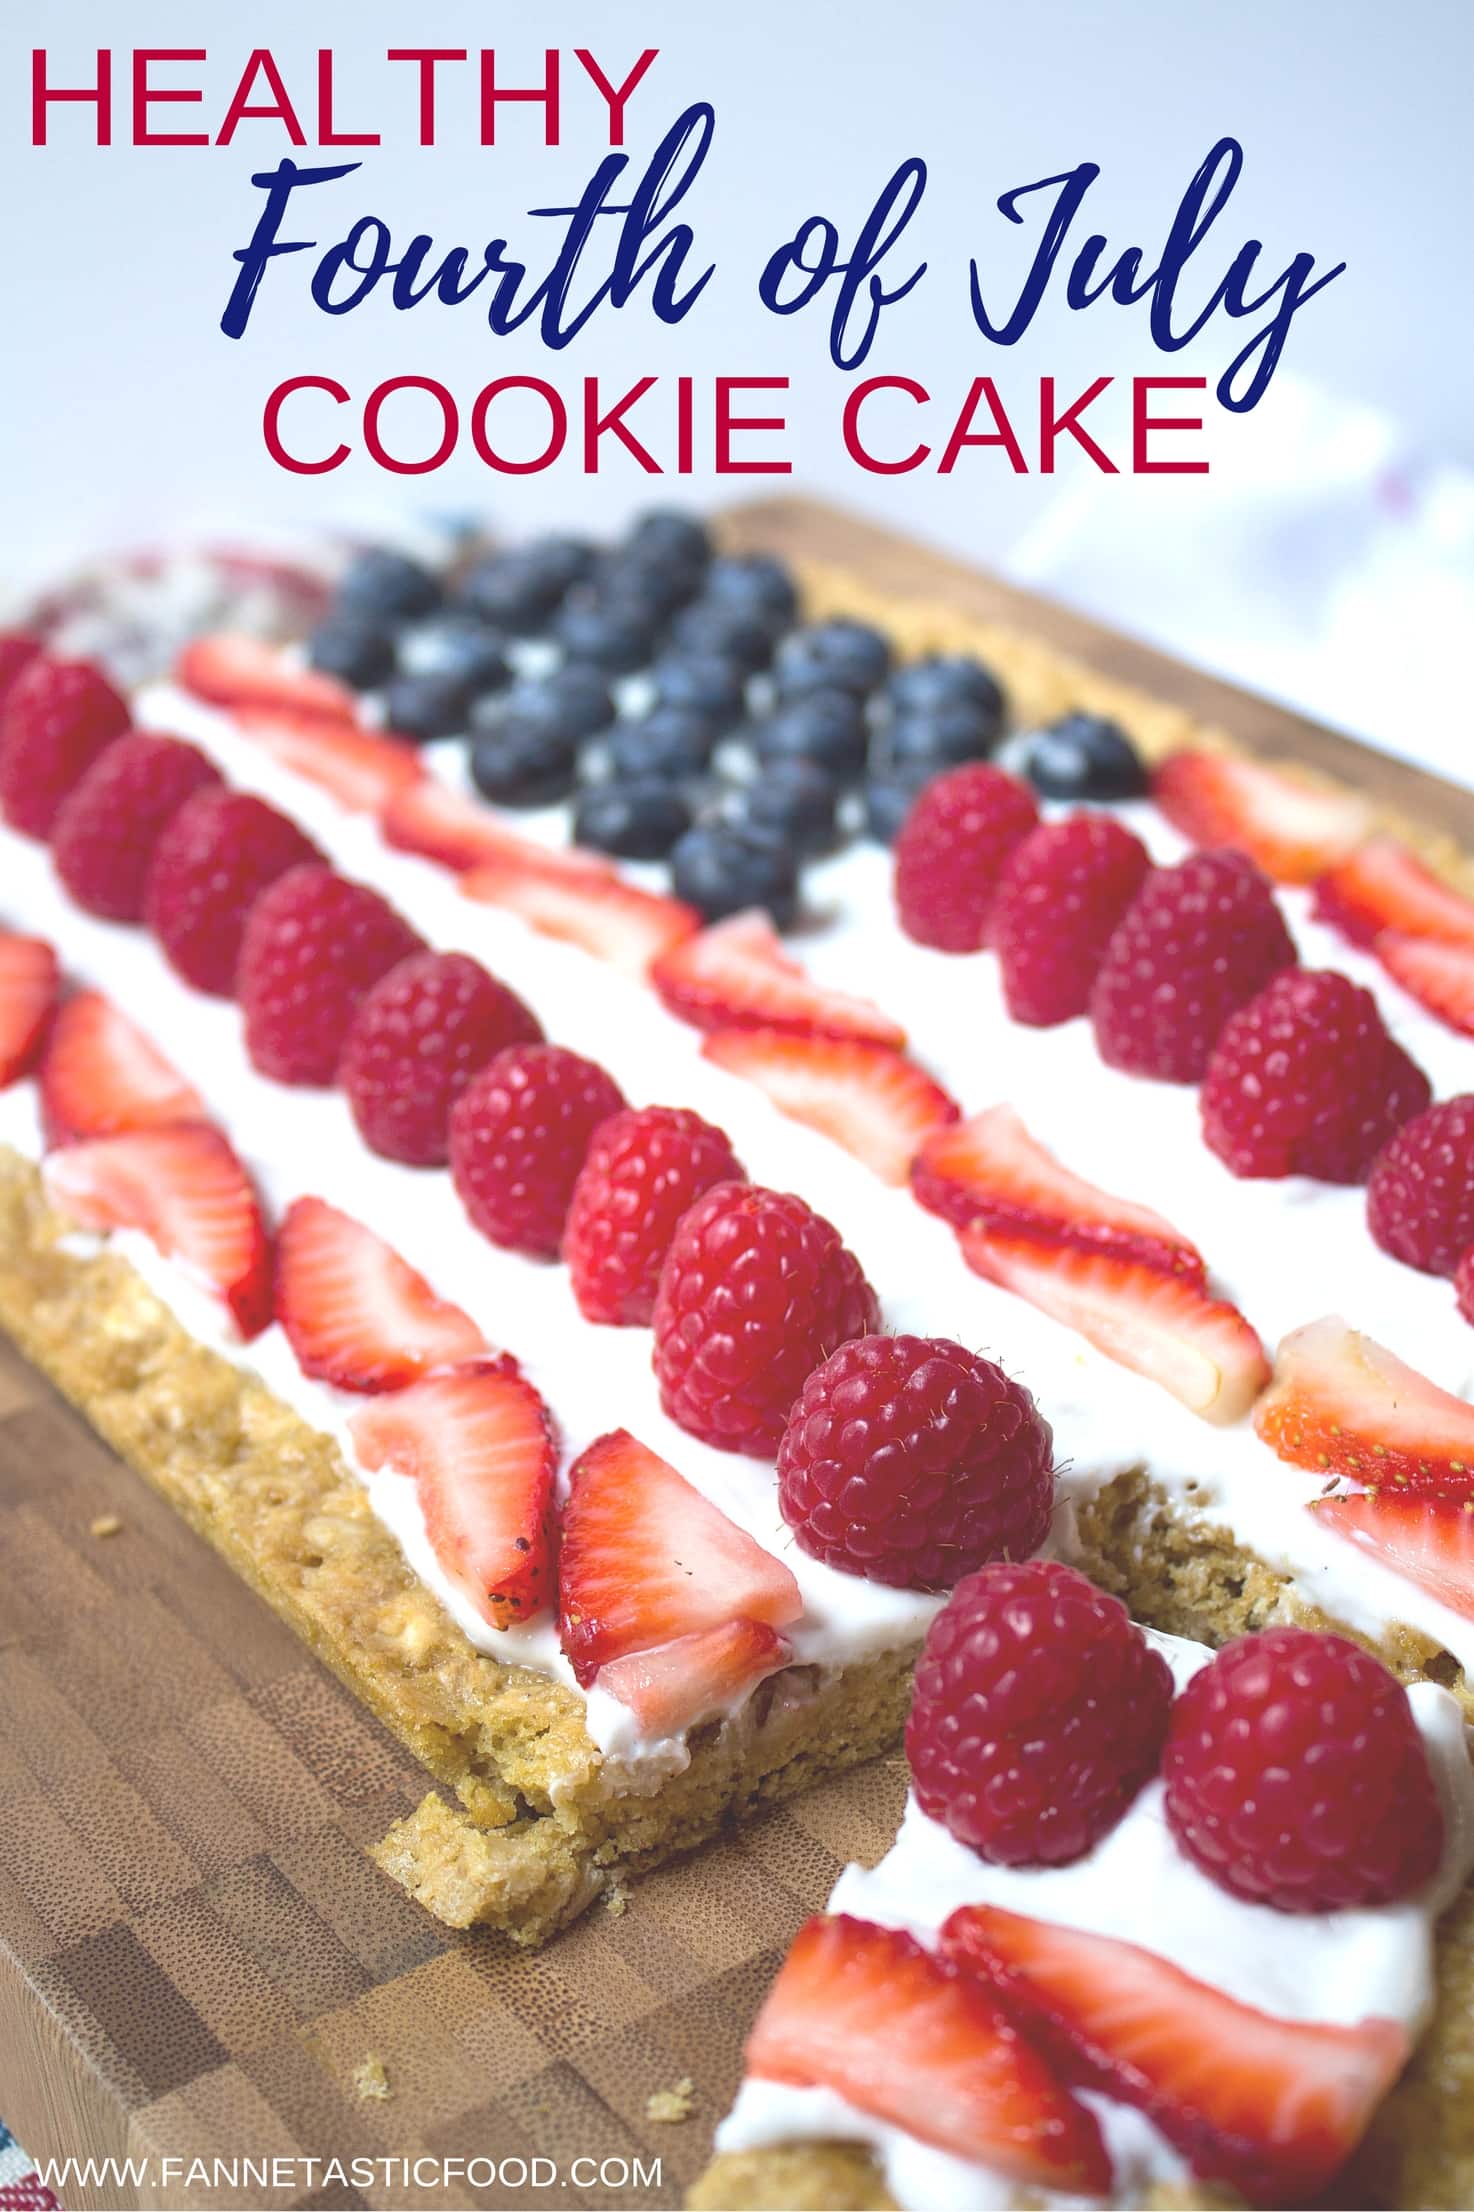 Healthy 4th of July Cookie Cake Recipe - Patriotic Dessert